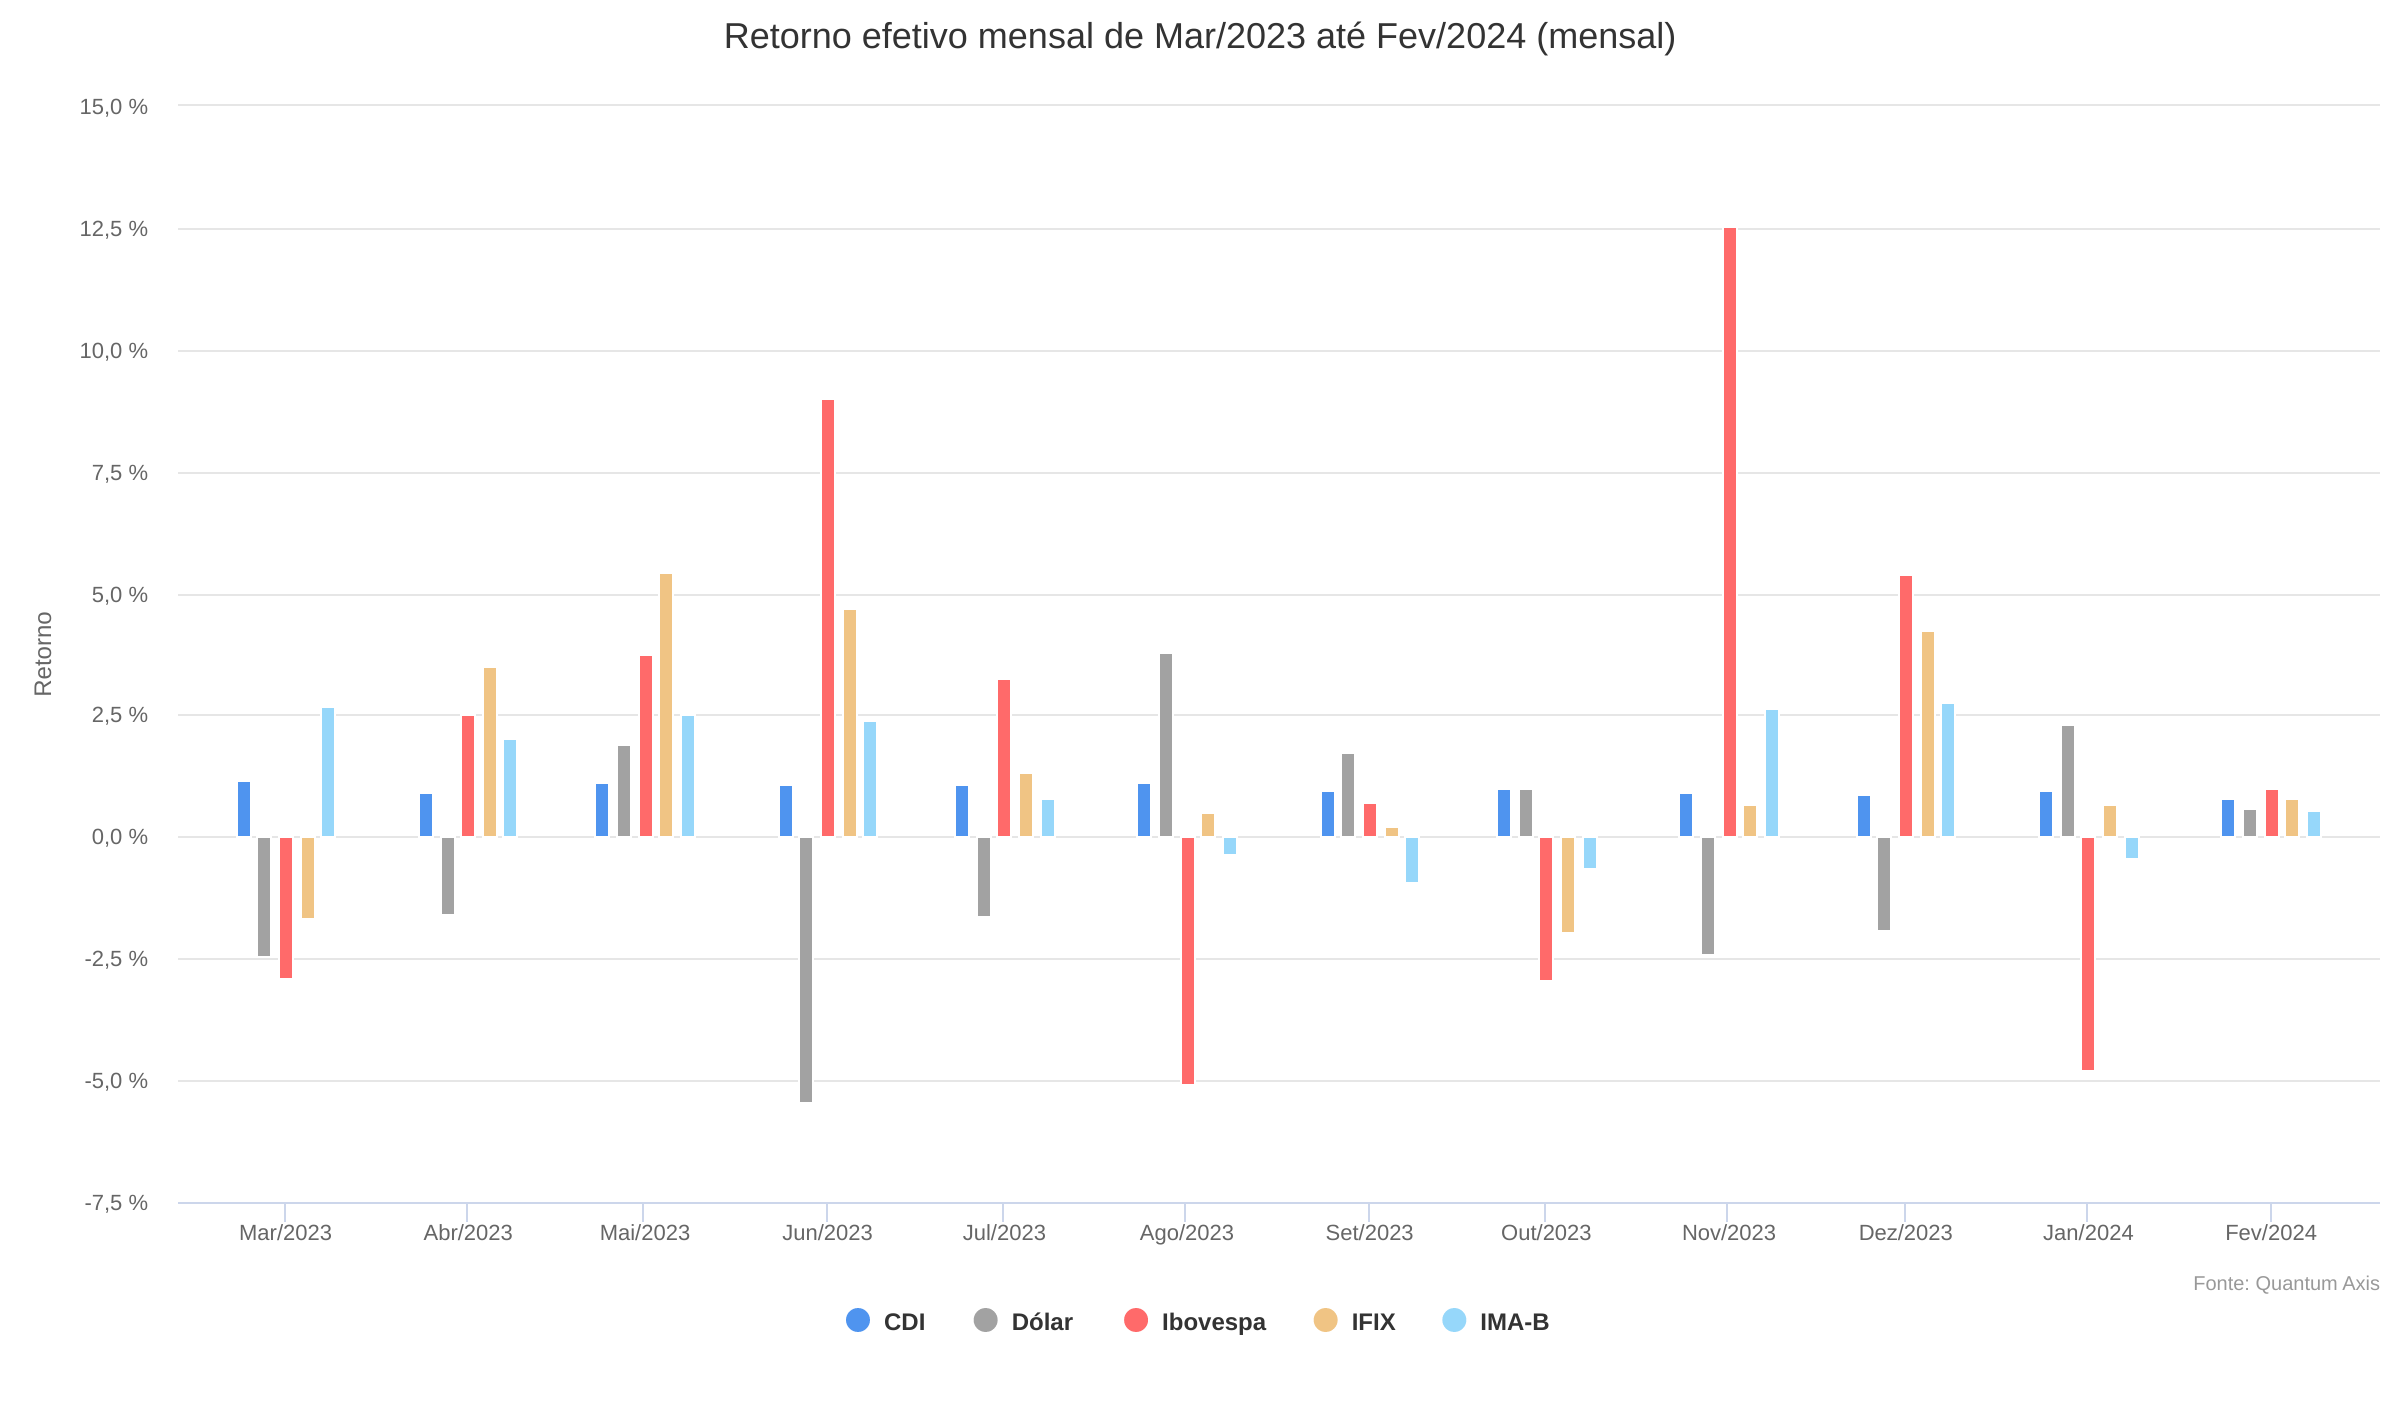 grafico retorno benchmarks 12 meses